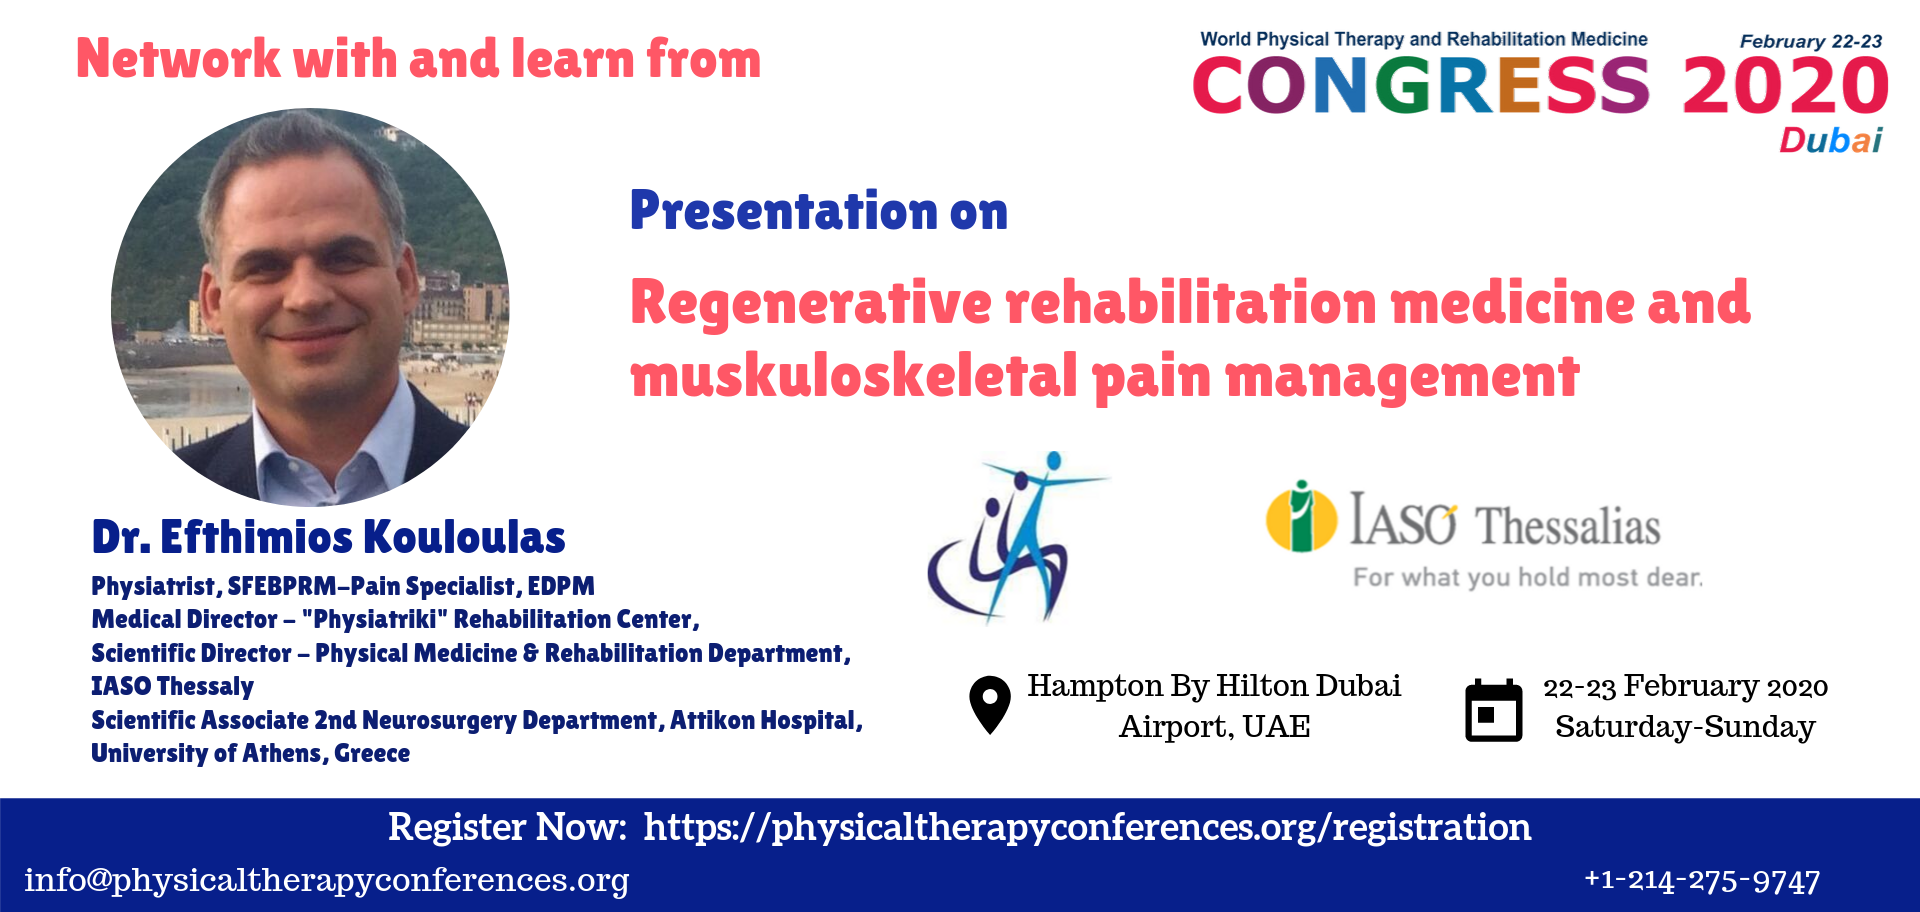 World Congress on Physical Therapy and Rehabilitation Medicine, Dubai UAE, Dubai, United Arab Emirates